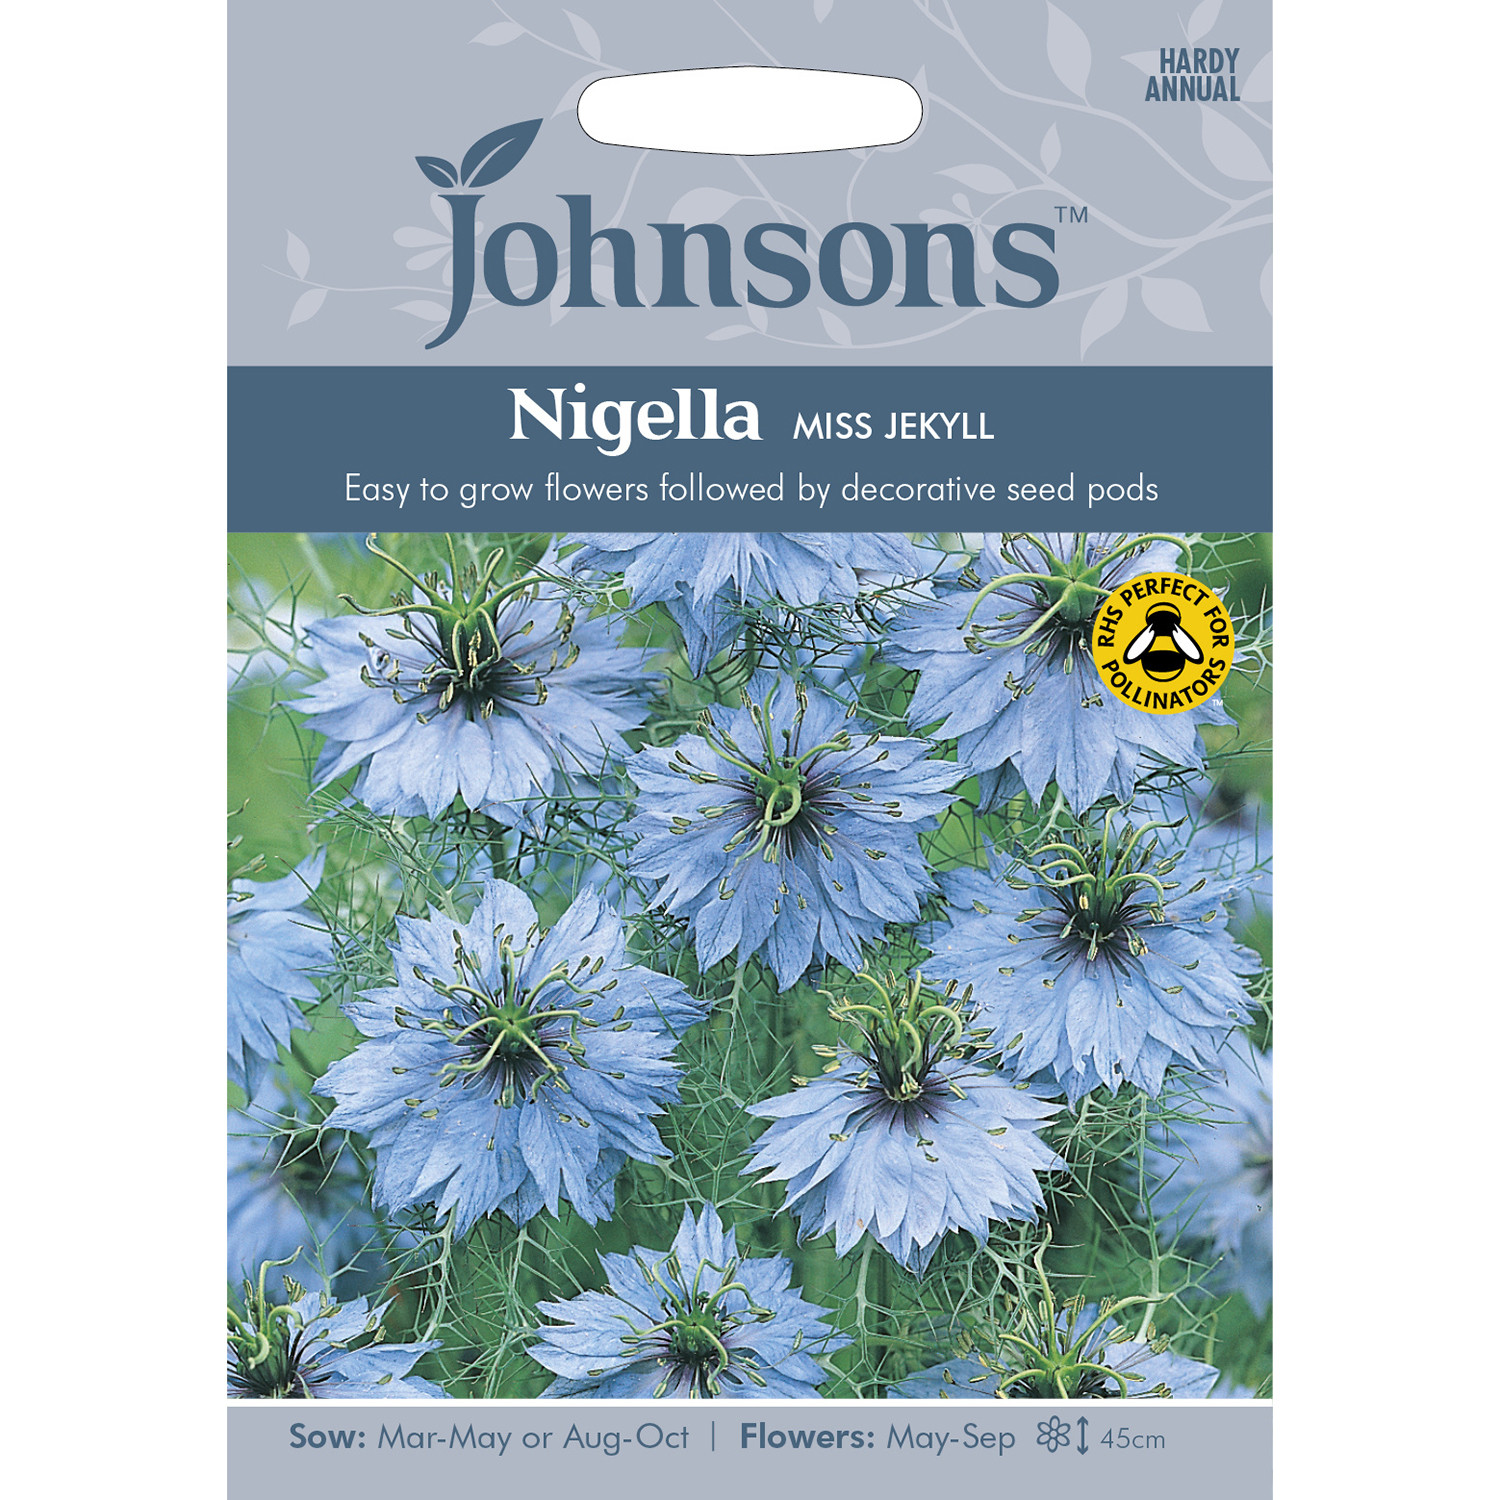 Johnsons Nigella Miss Jekyll Flower Seeds Image 2